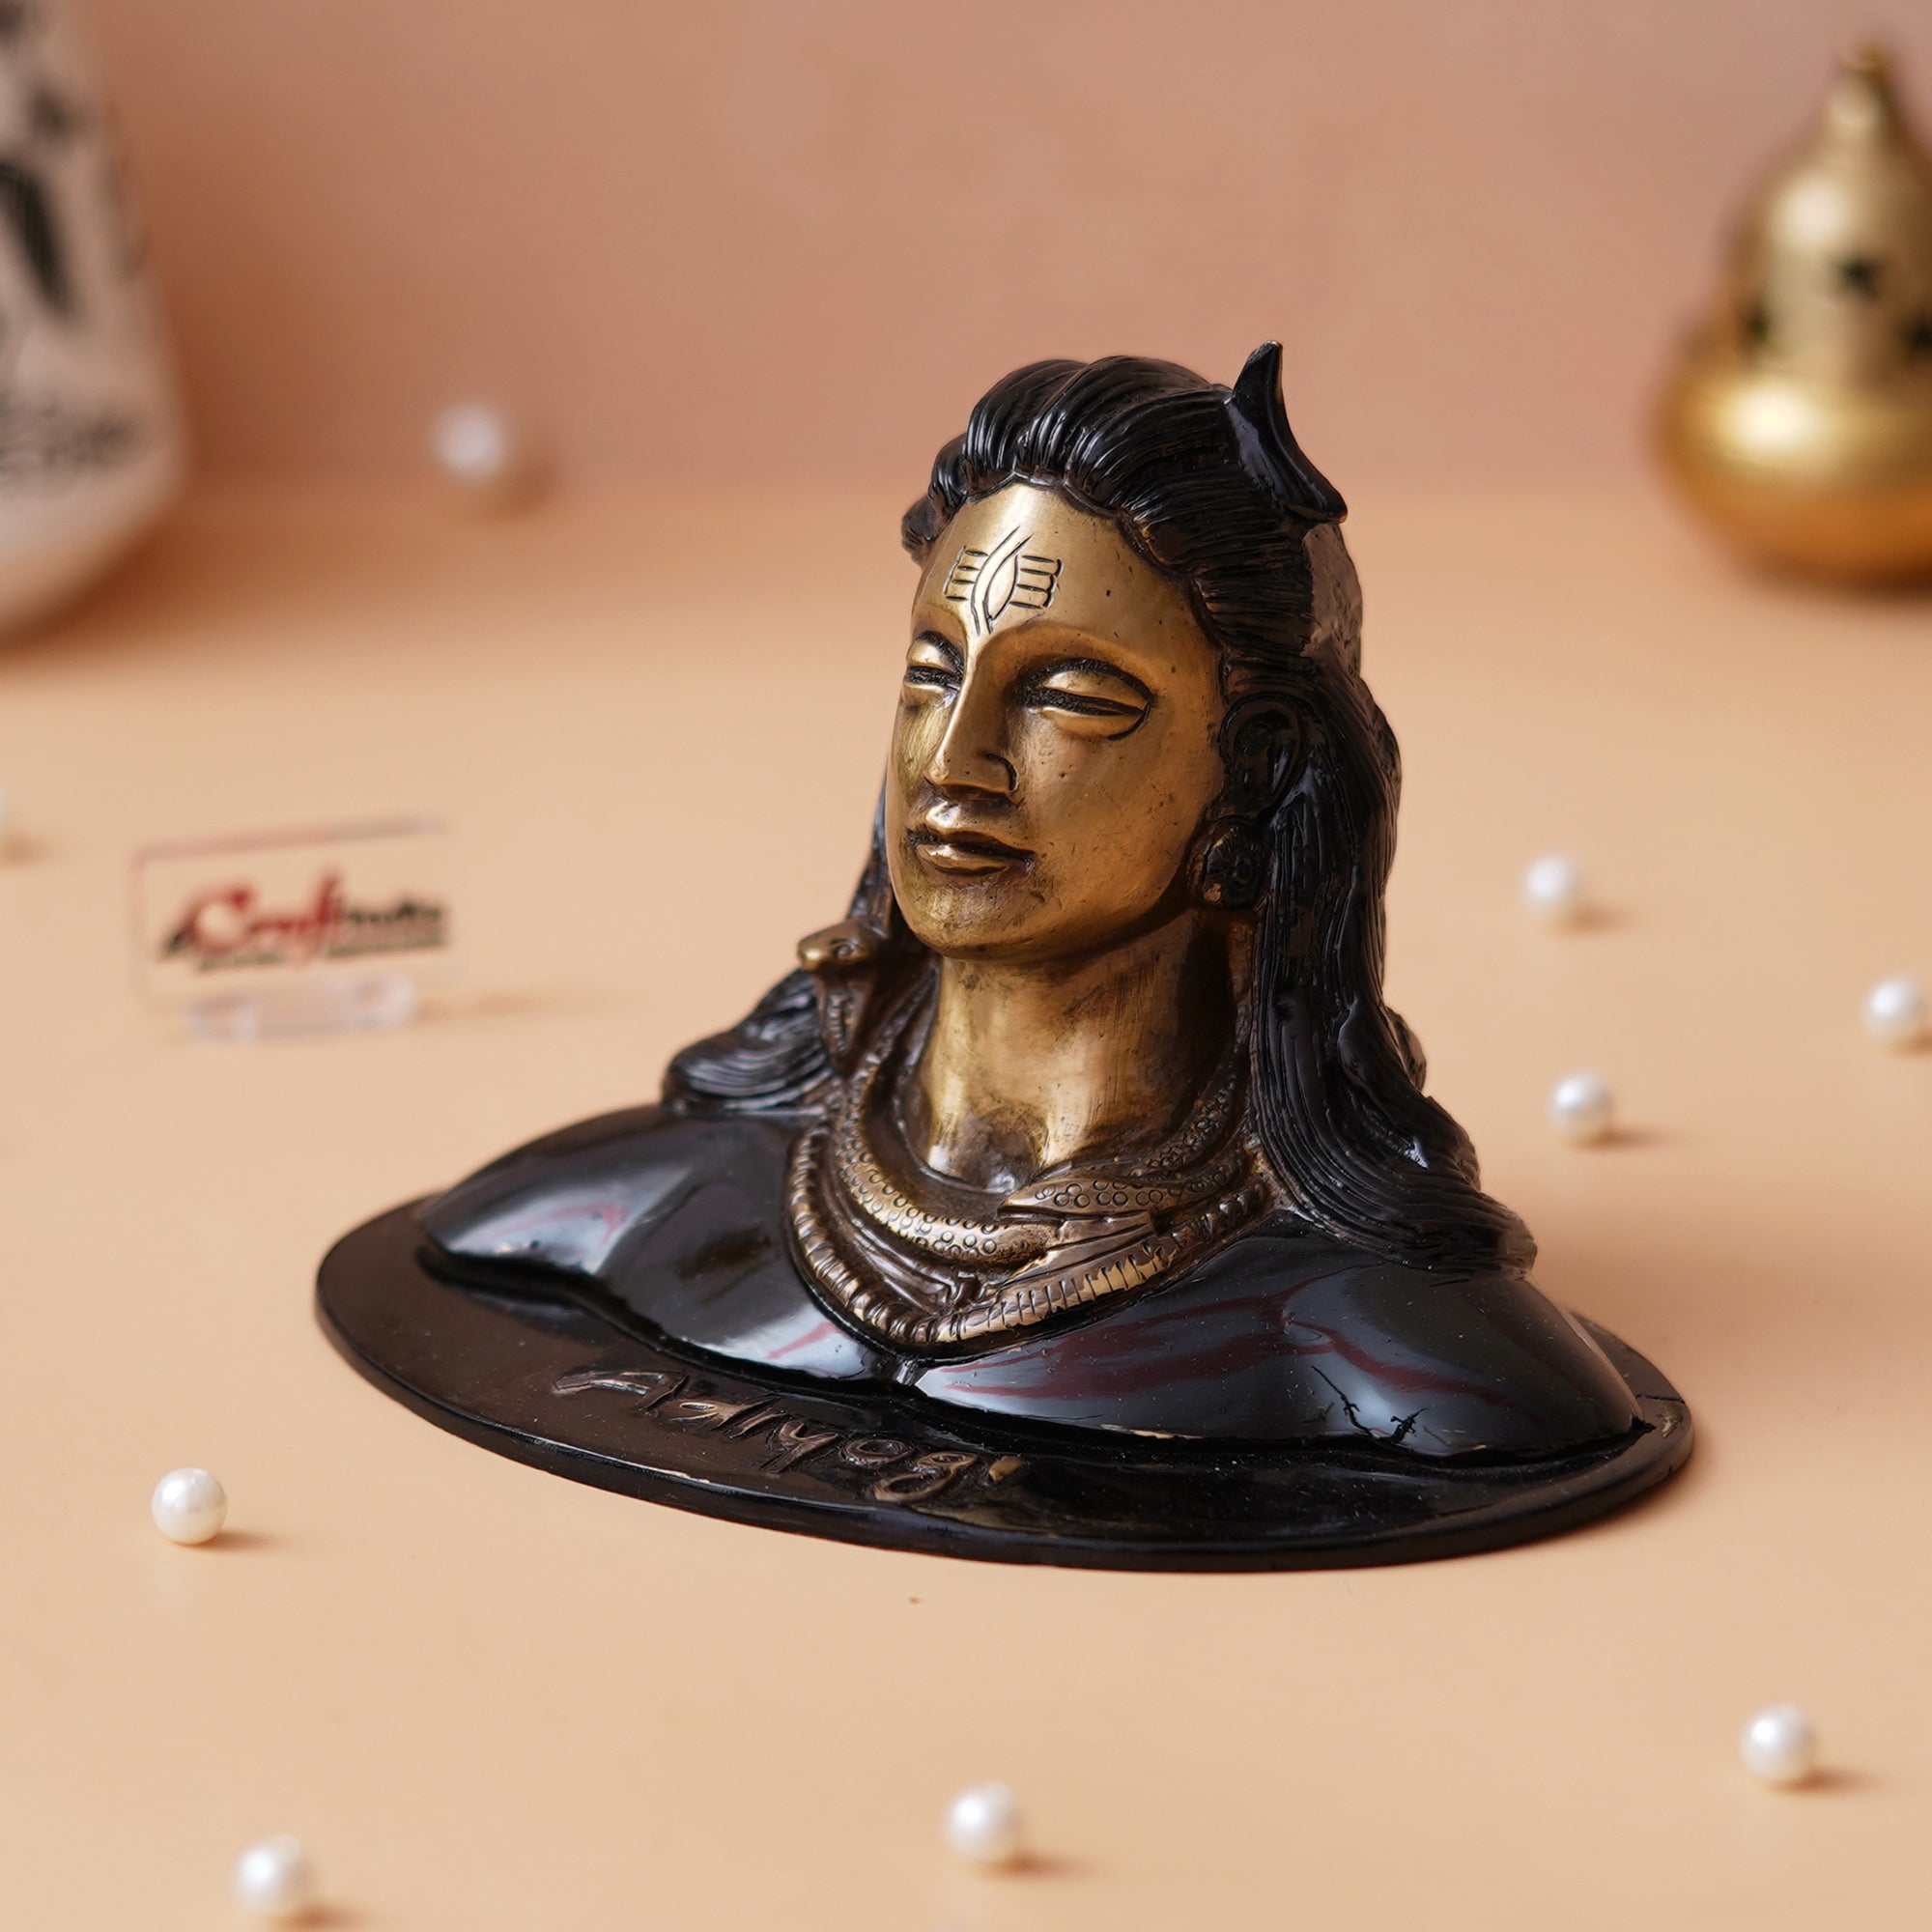 Black and Golden Brass Lord Adiyogi Shiva Statue, Shiv Murti, Shiva Idol for Car Dashboard, Home Office Decoration - Gift for Maha Shivratri Festival 1